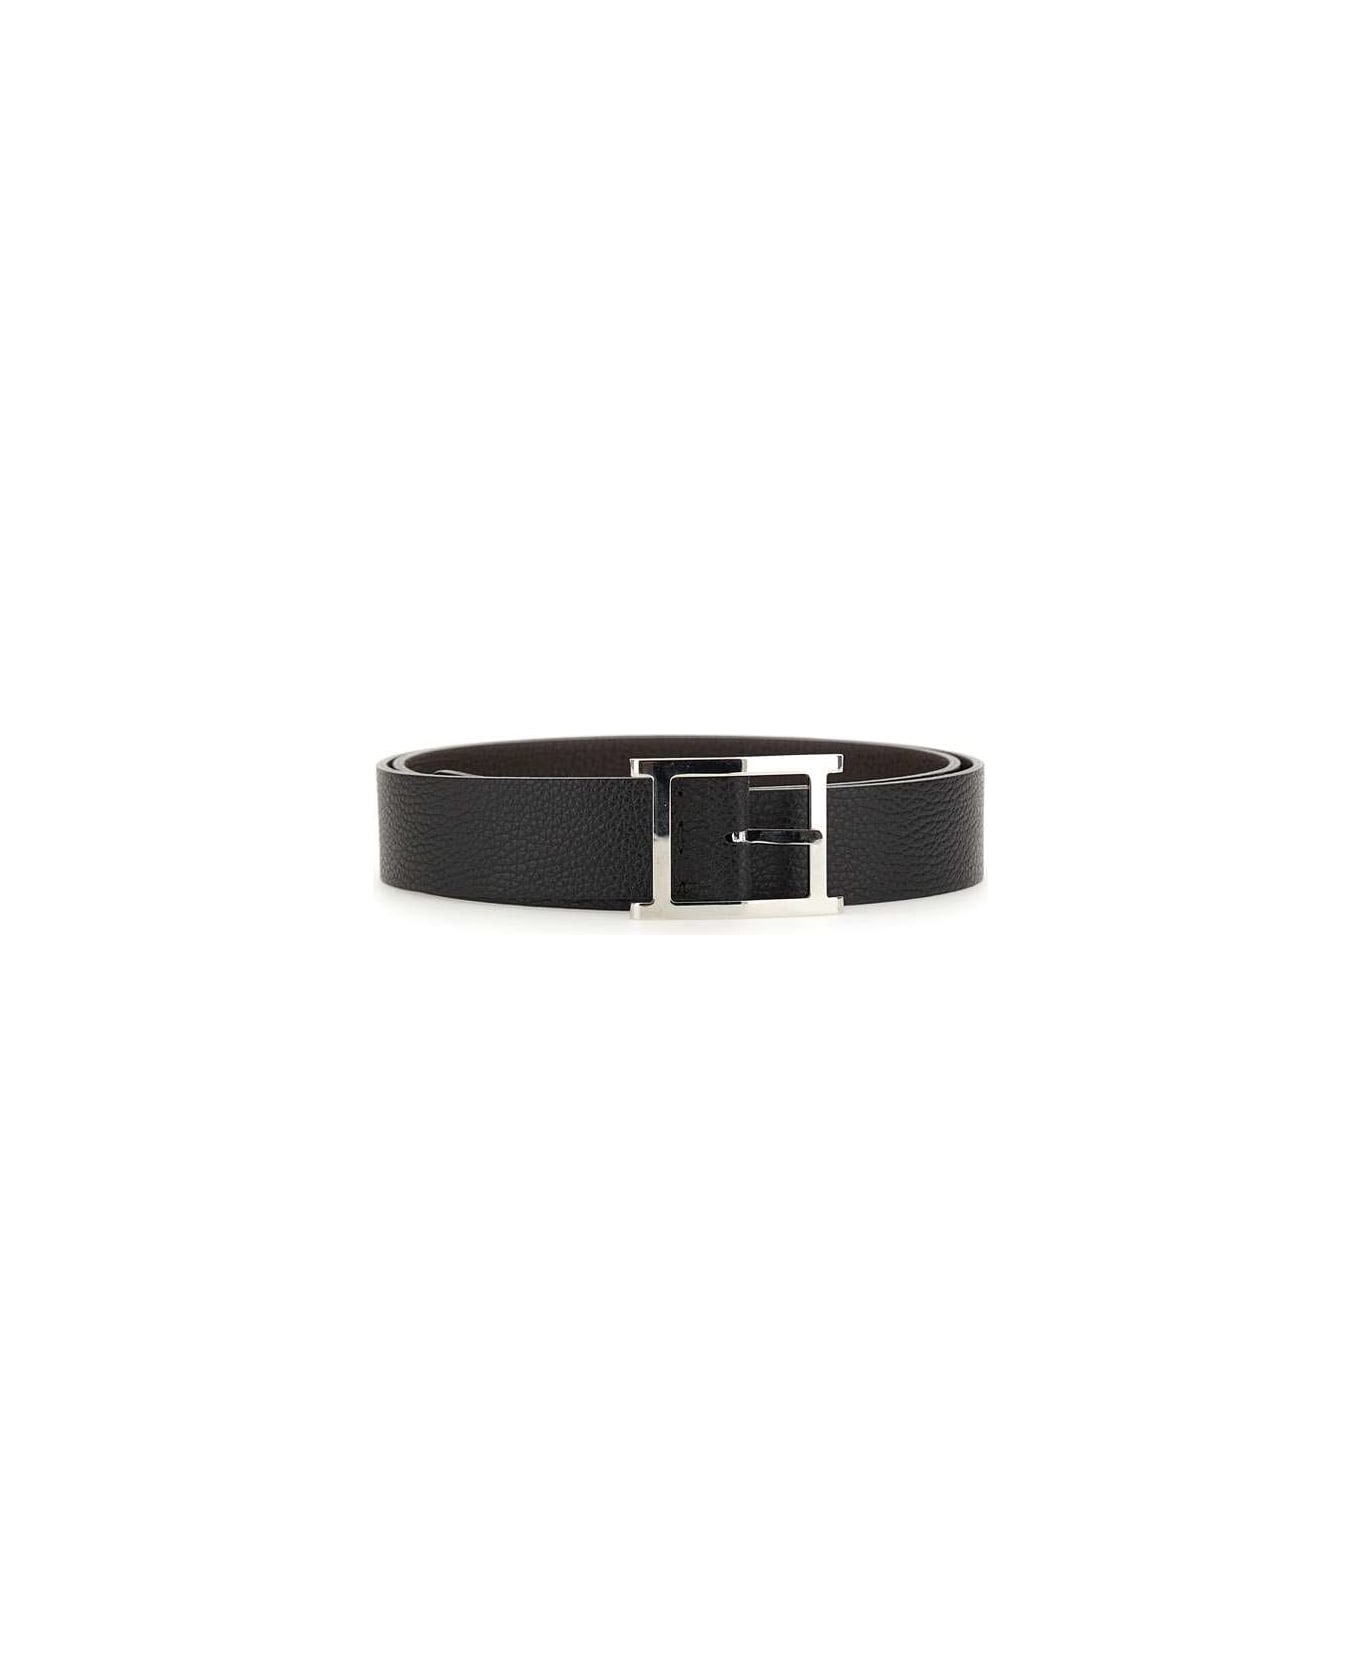 Orciani "micron Double" Belt - BLACK/BROWN ベルト